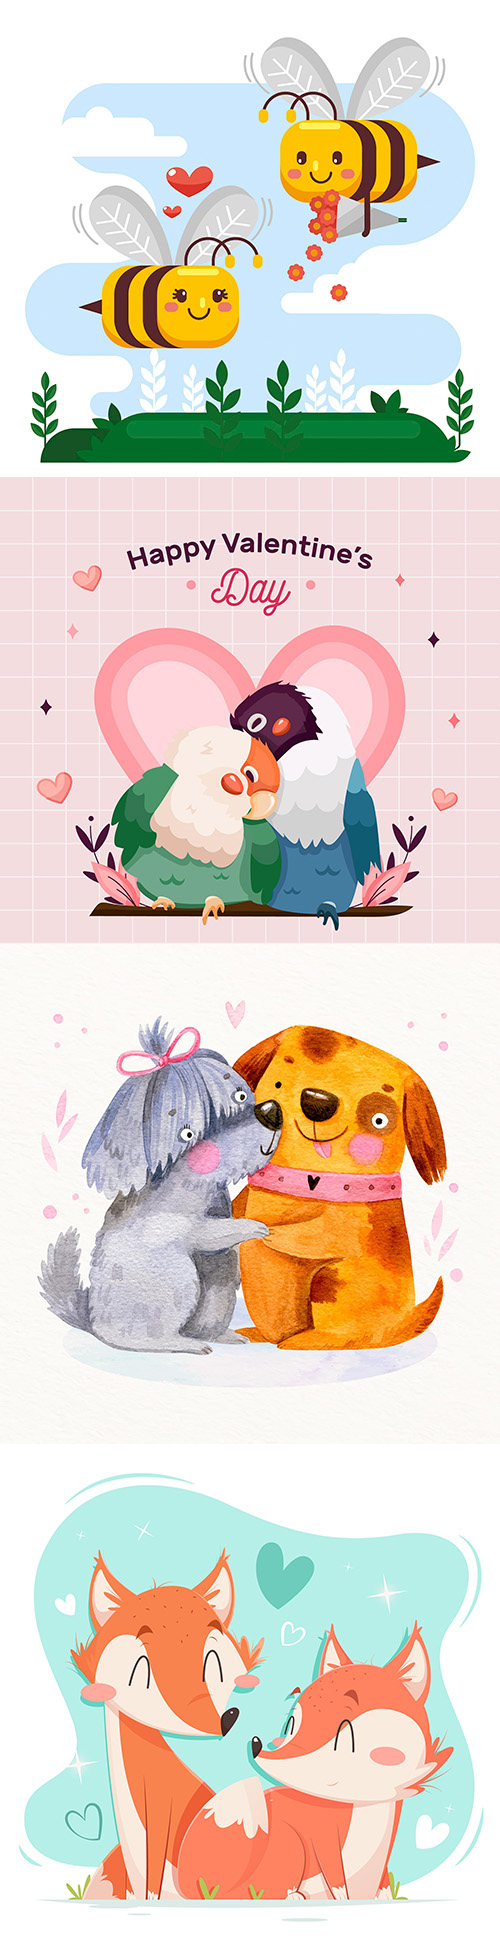 Valentine's Day romantic pair cartoon animal illustration
